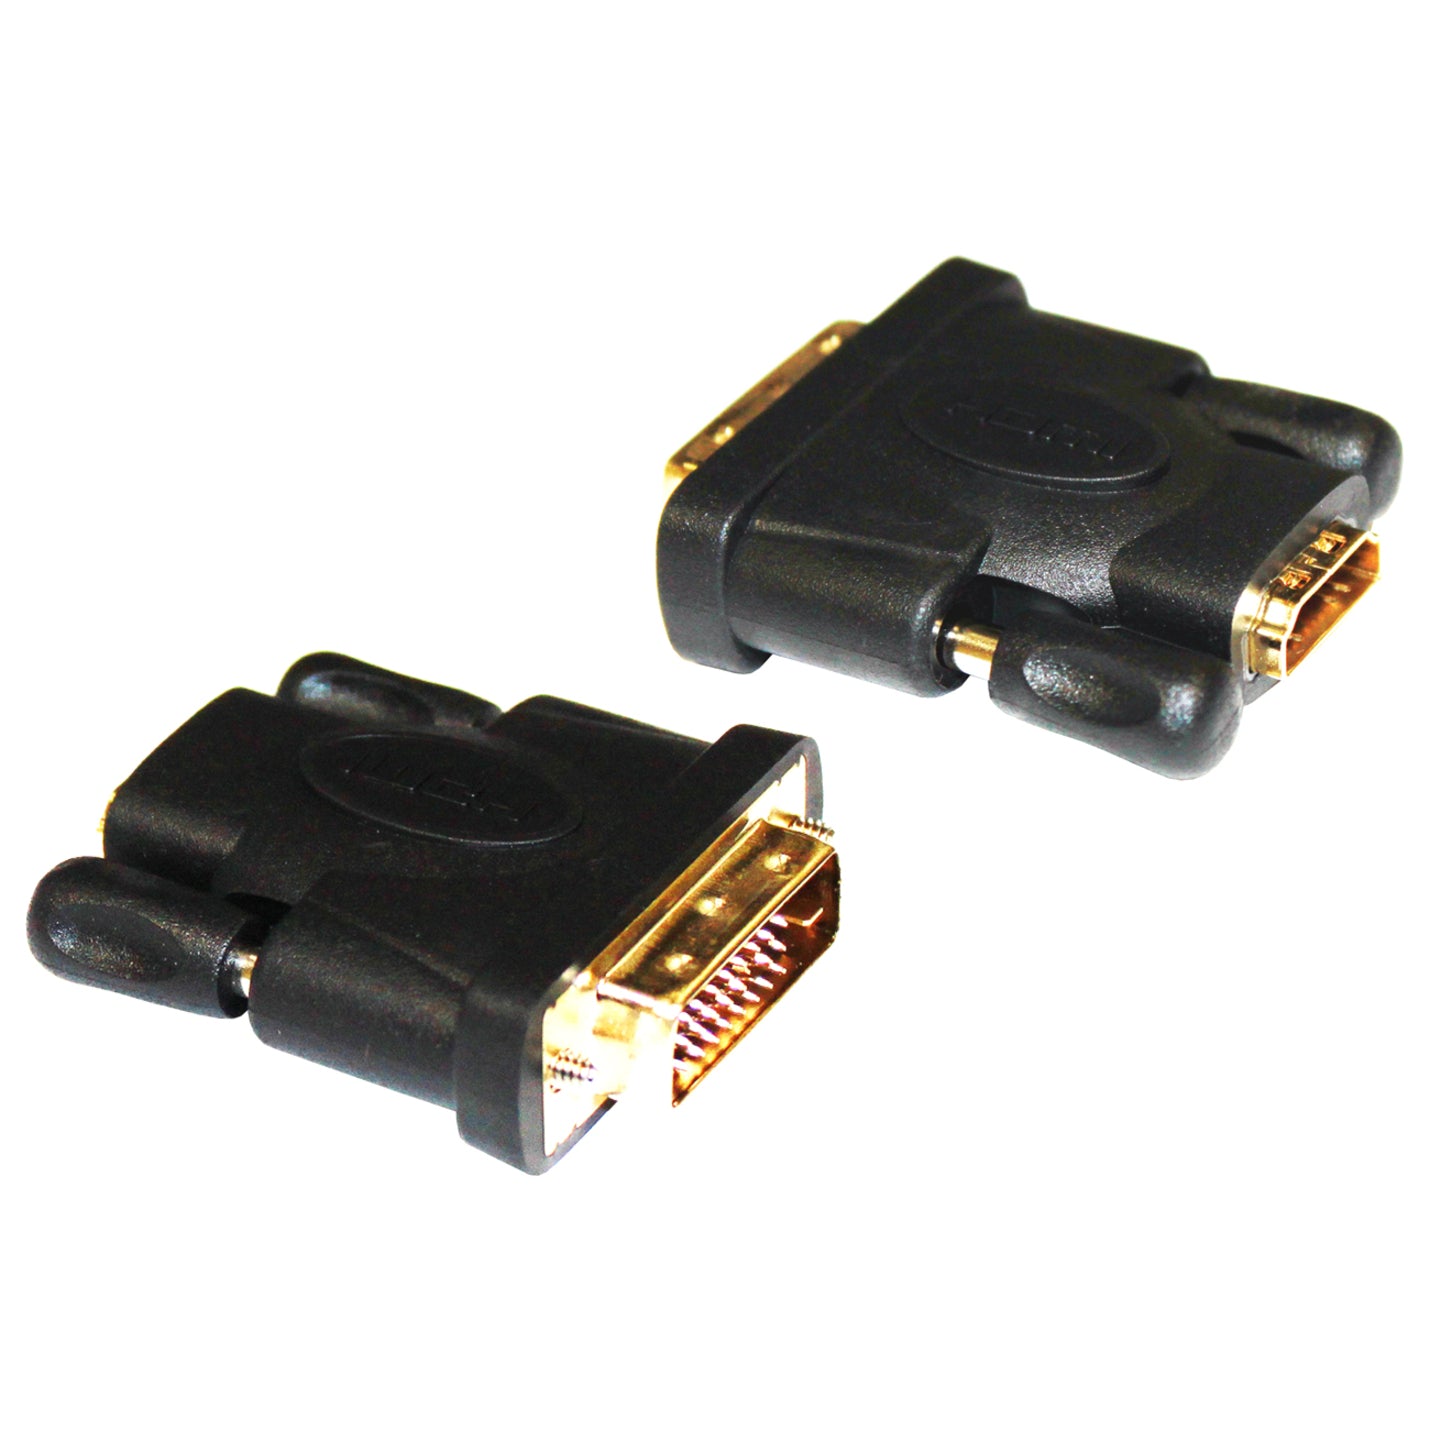 ClearLinks CL-HDMI/DVI-FM Premium Gold Female HDMI to Male DVI (24+1) Adapter, Video Adapter